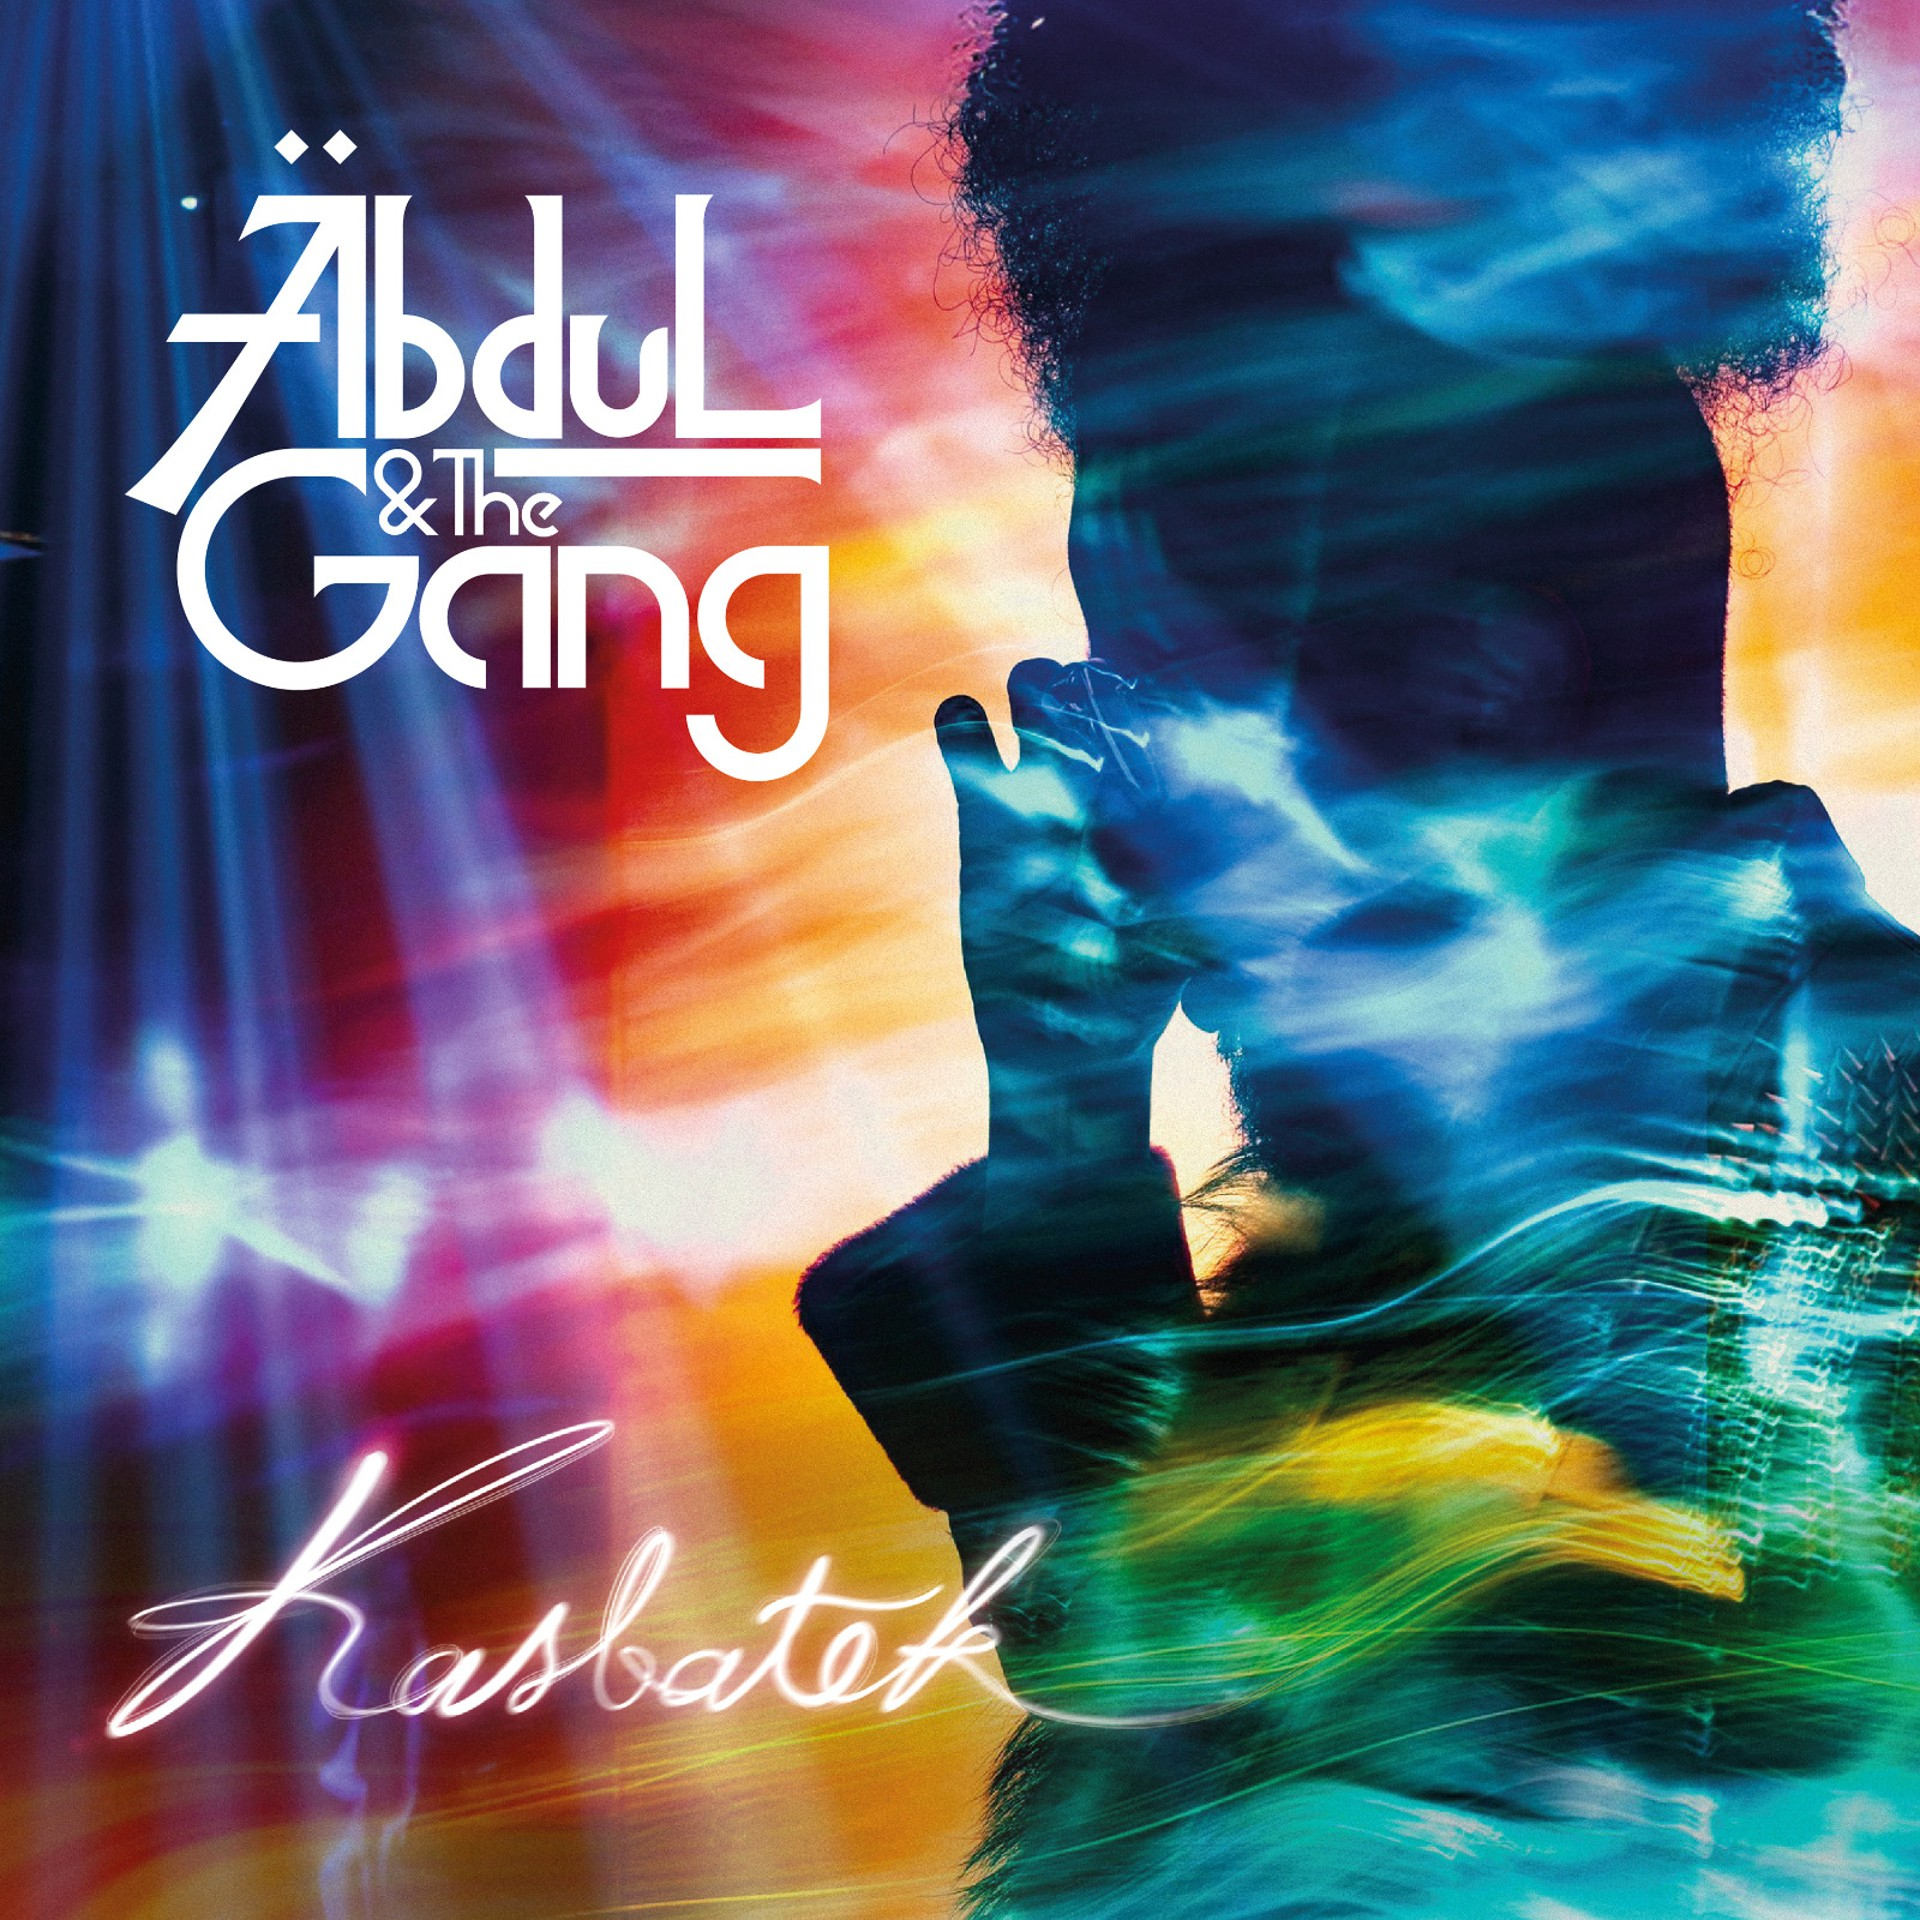 Abdul and The Gang | Kasbatek